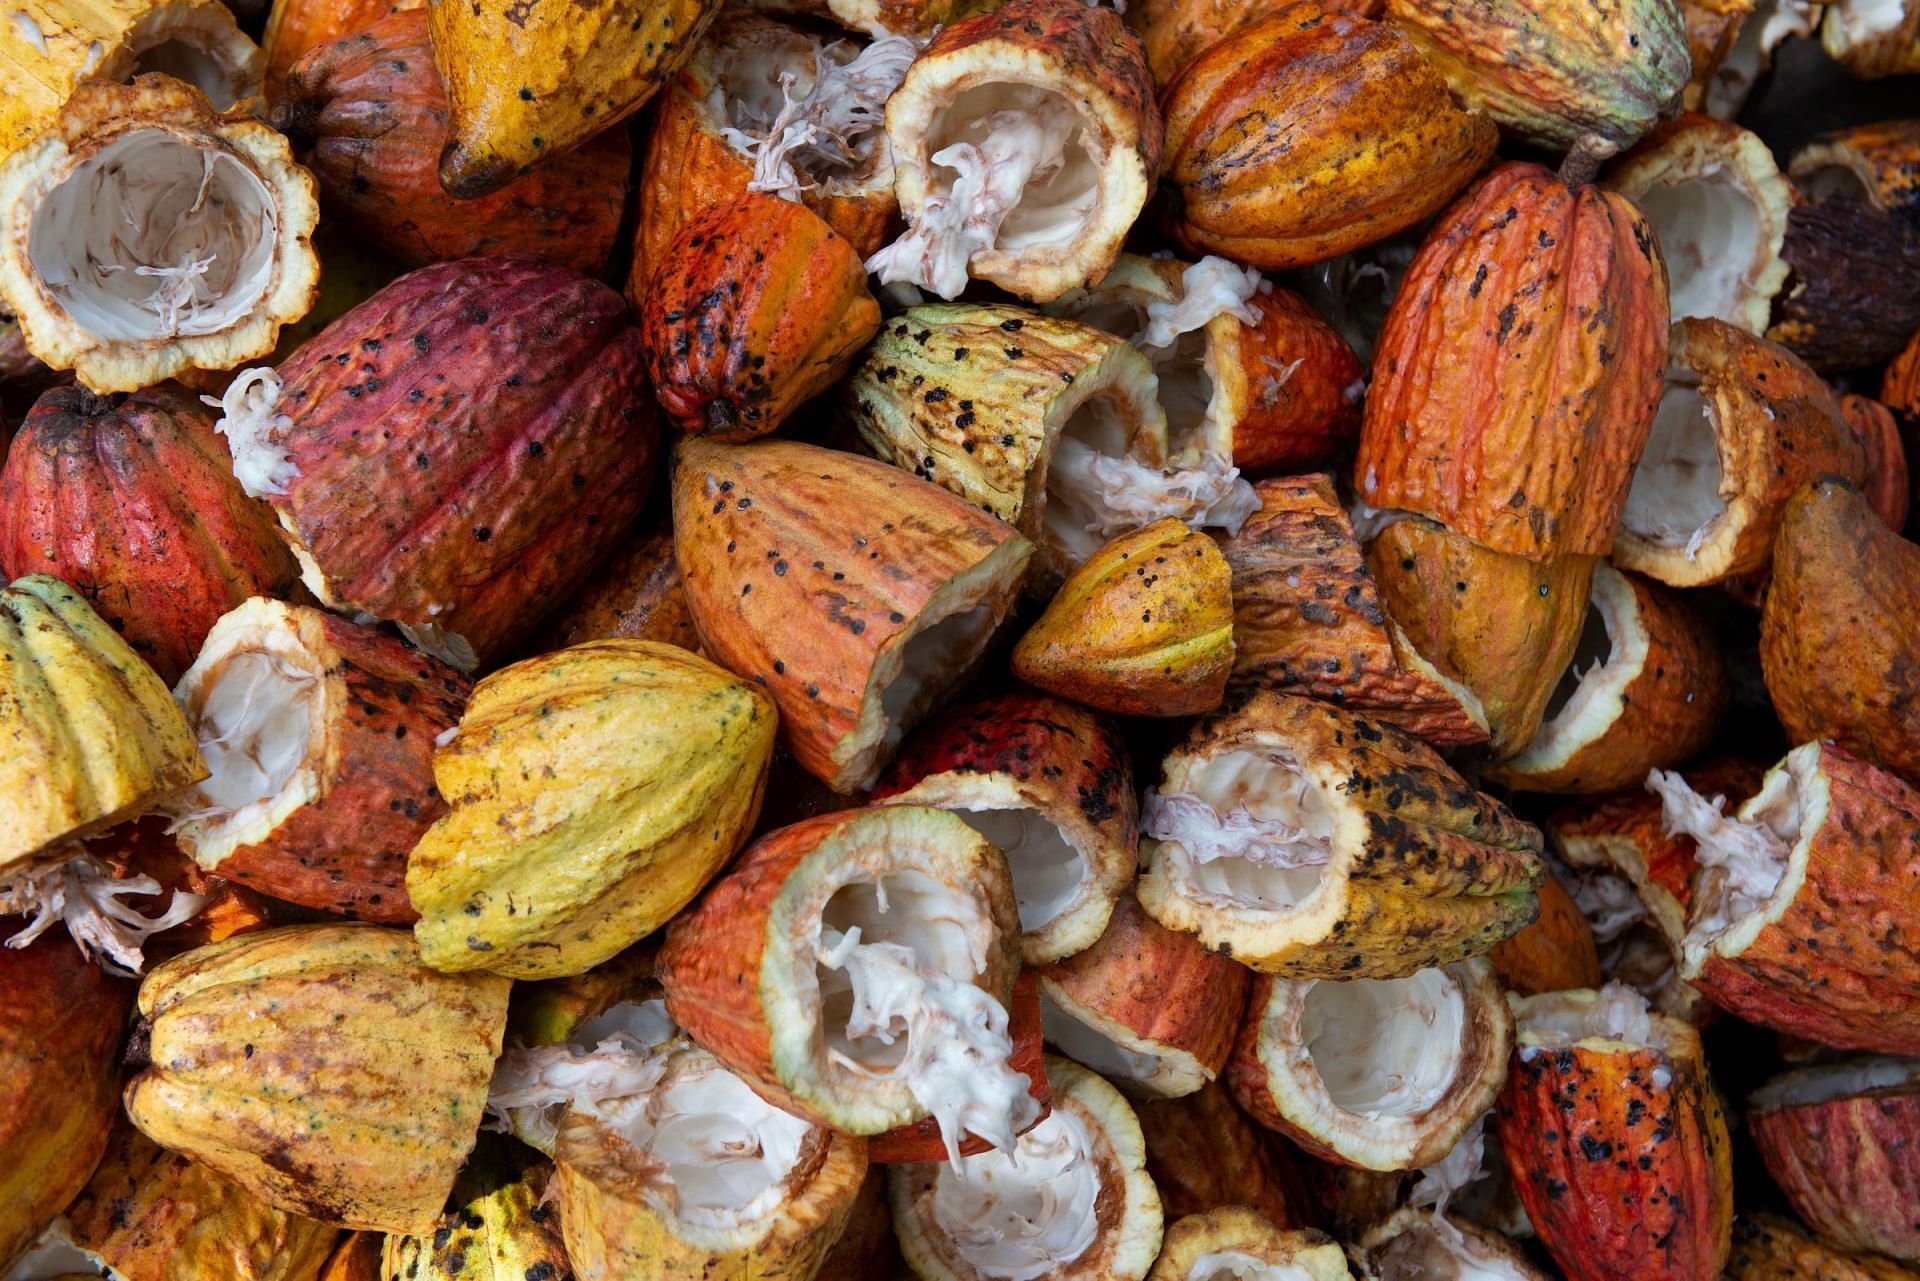 Cocoa beans are rich in antioxidants (Image via Unsplash/Rodrigo Flores)